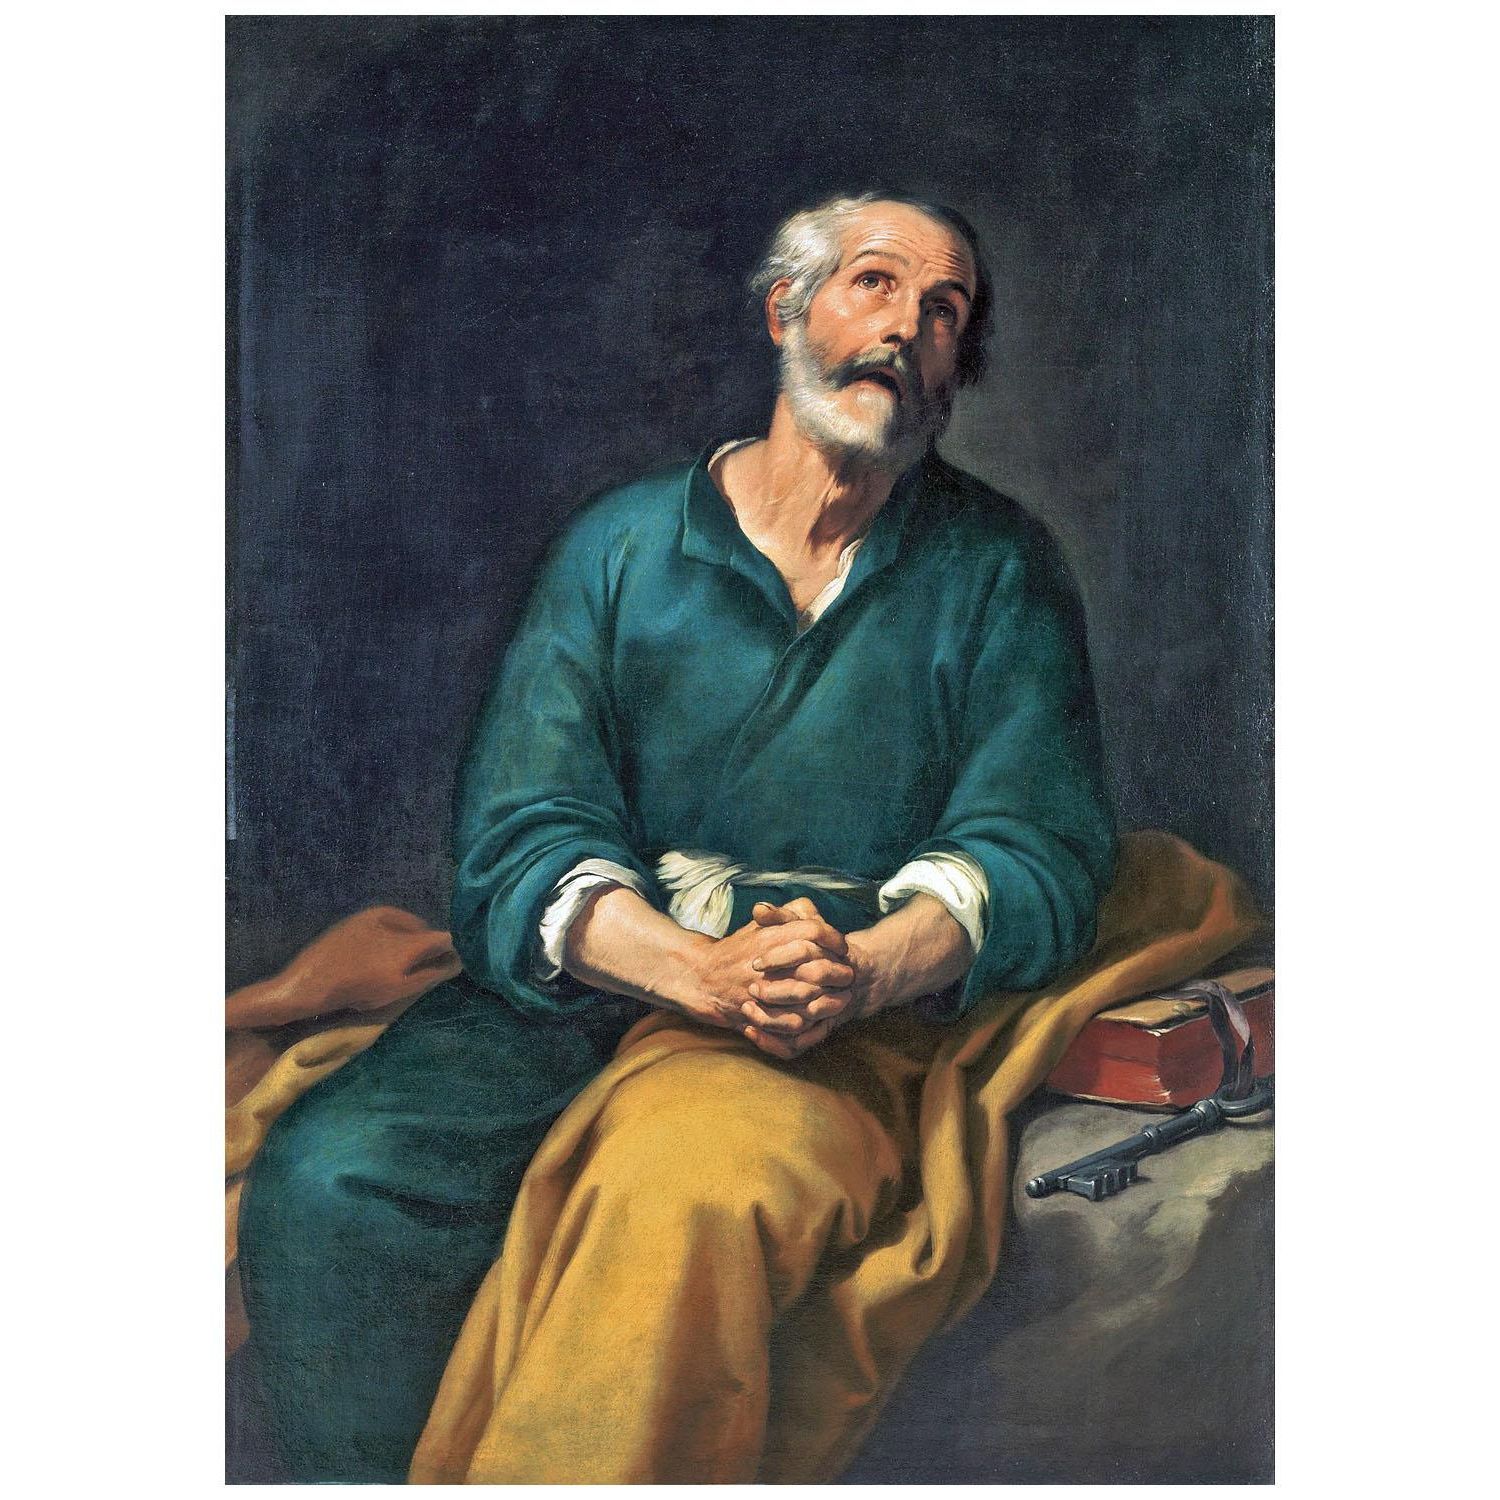 Bartolome Esteban Murillo. San Pedro en lágrimas. 1650. Museo de Bellas Artes Bilbao